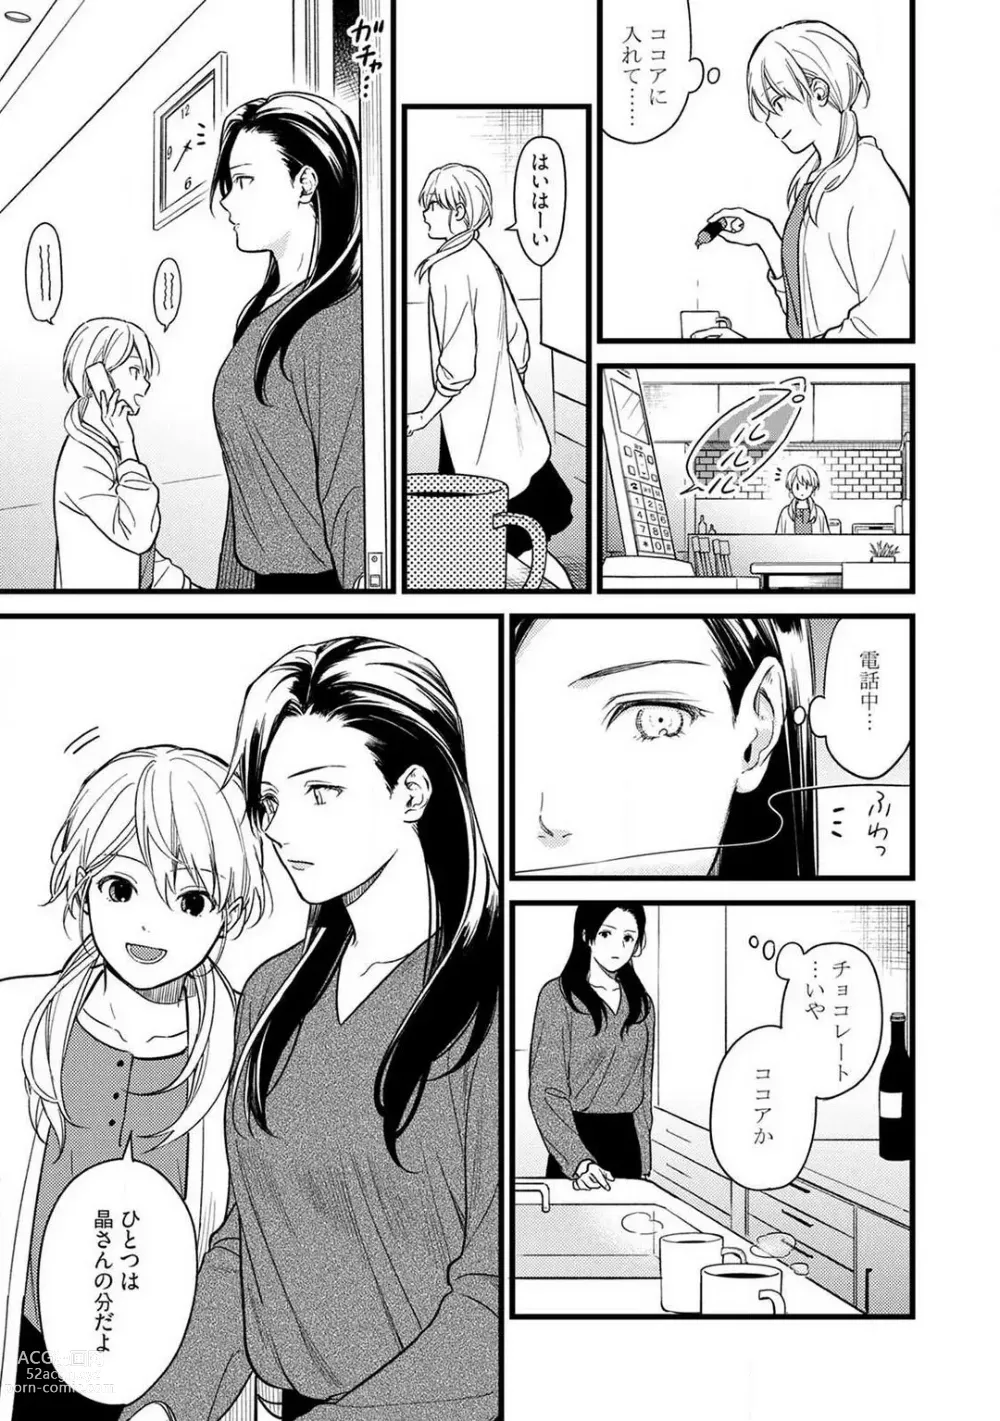 Page 6 of manga Shitsuji